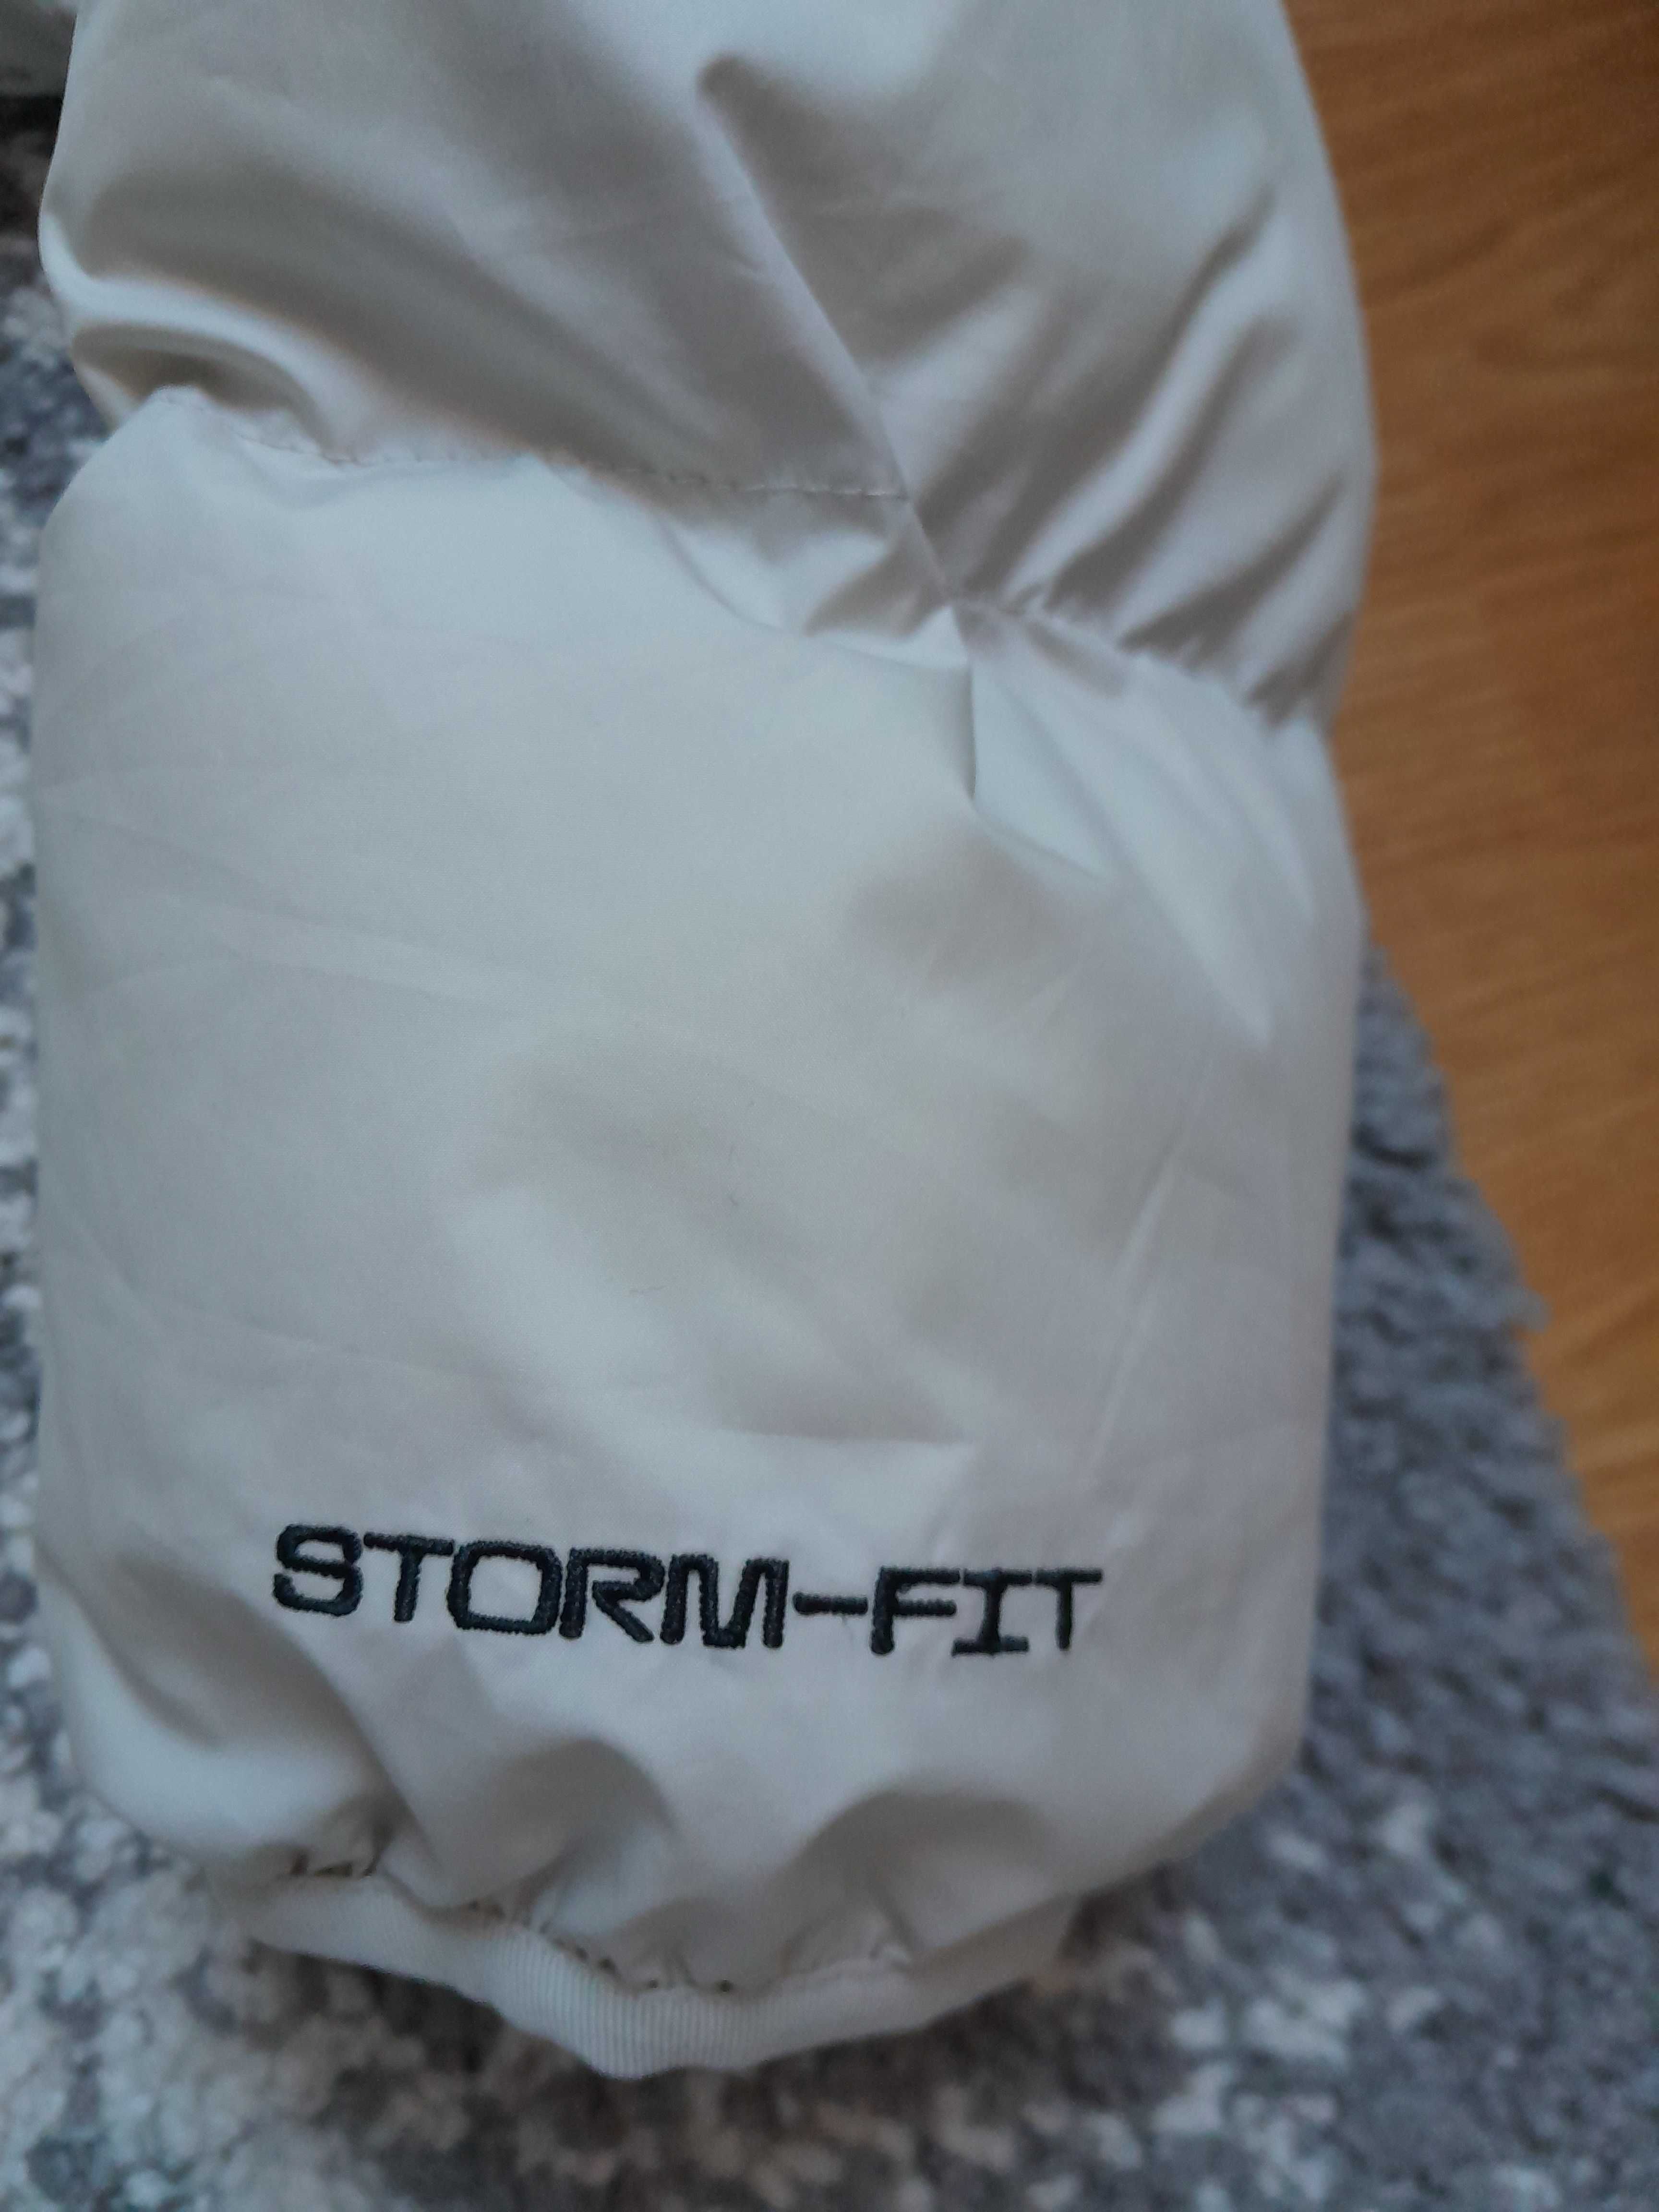 Nike Storm-FIT jacheta